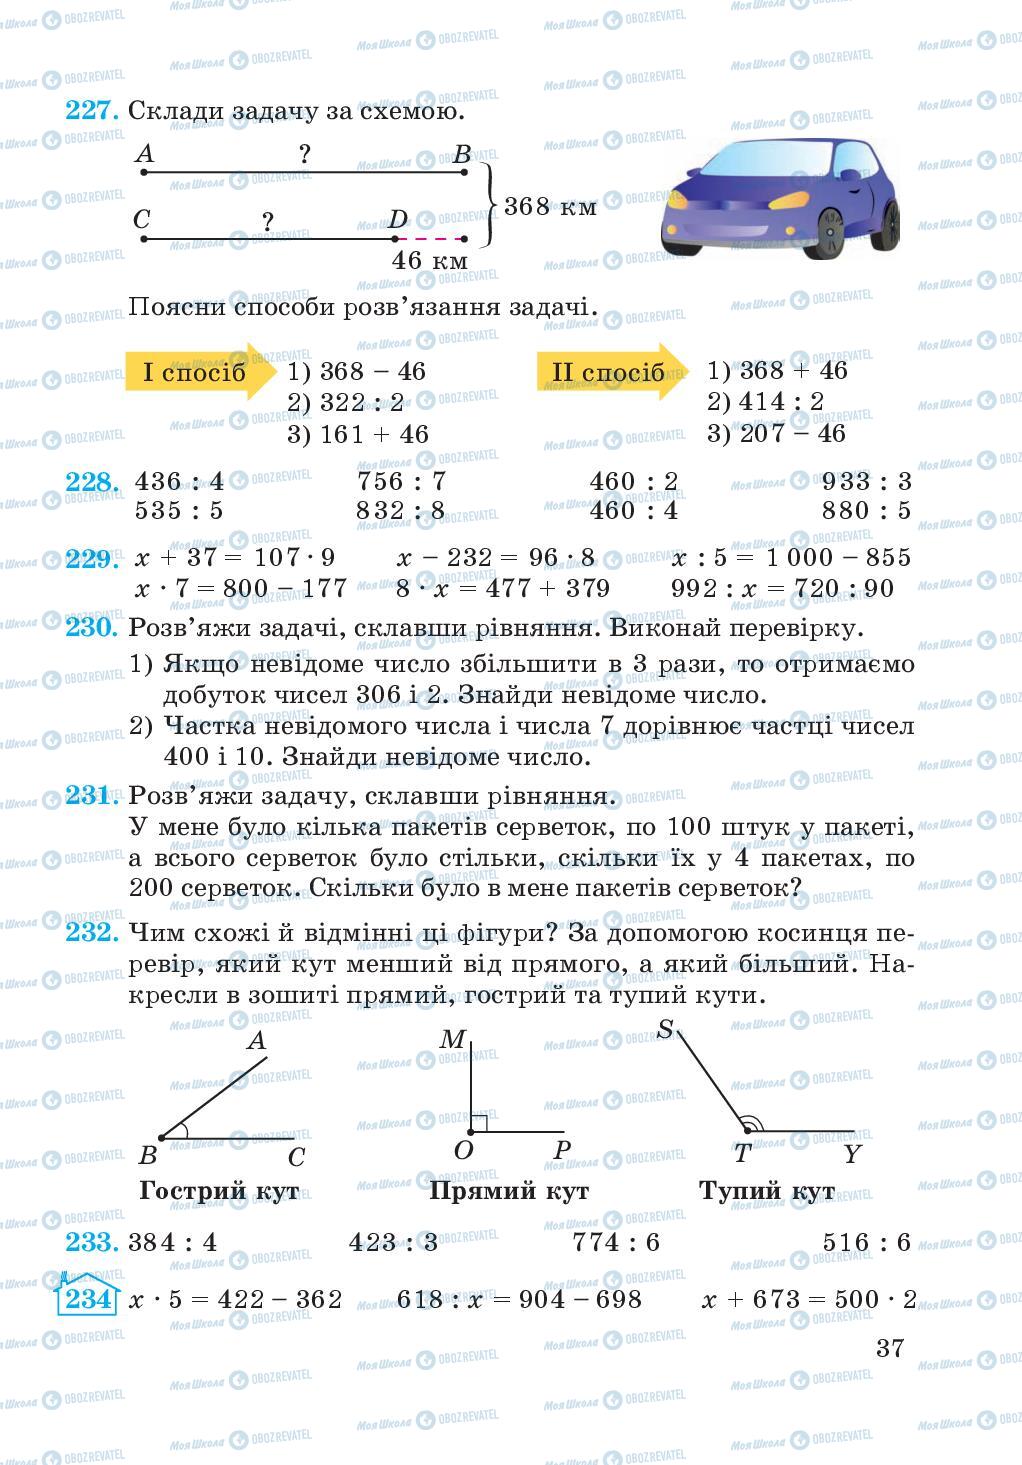 Учебники Математика 4 класс страница 37